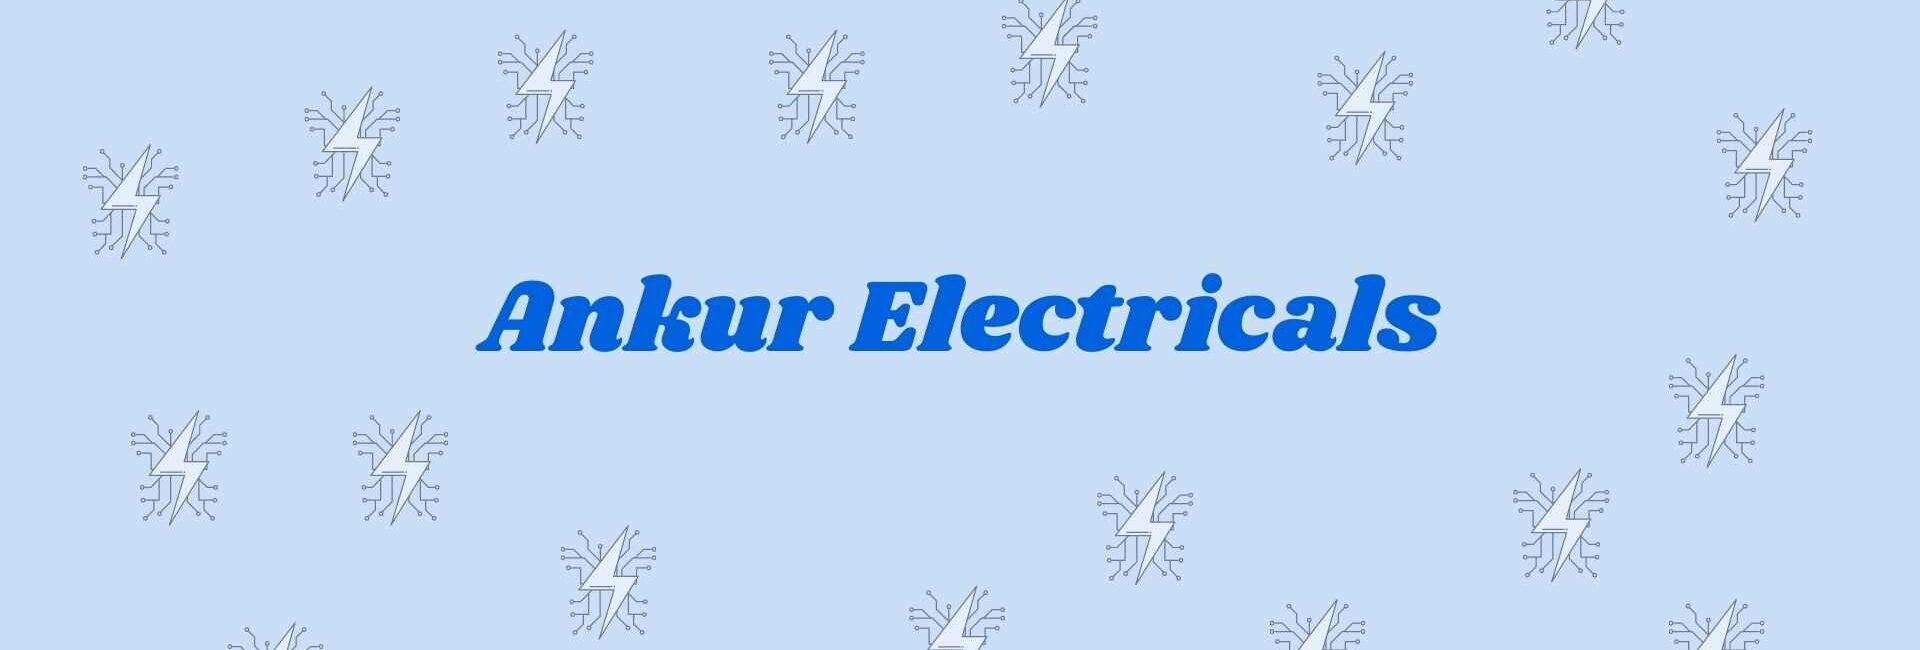 Ankur Electricals - Electronics Goods Dealer in Noida